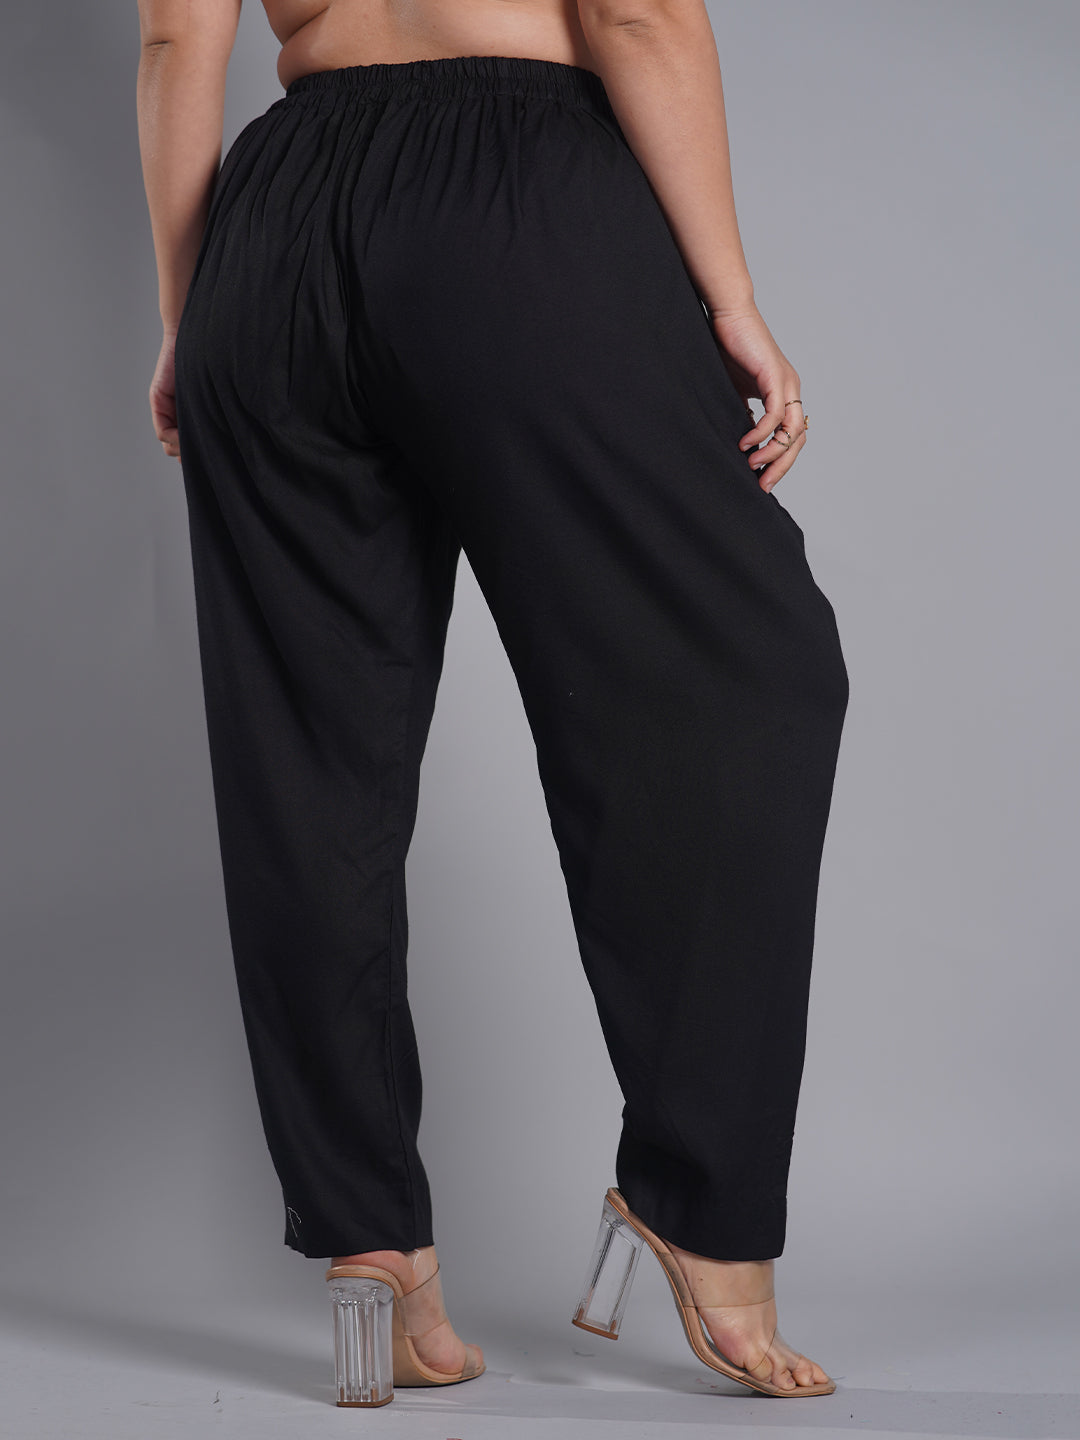 Buy LIFE Black Solid Regular Fit Rayon Women's Casual Pants